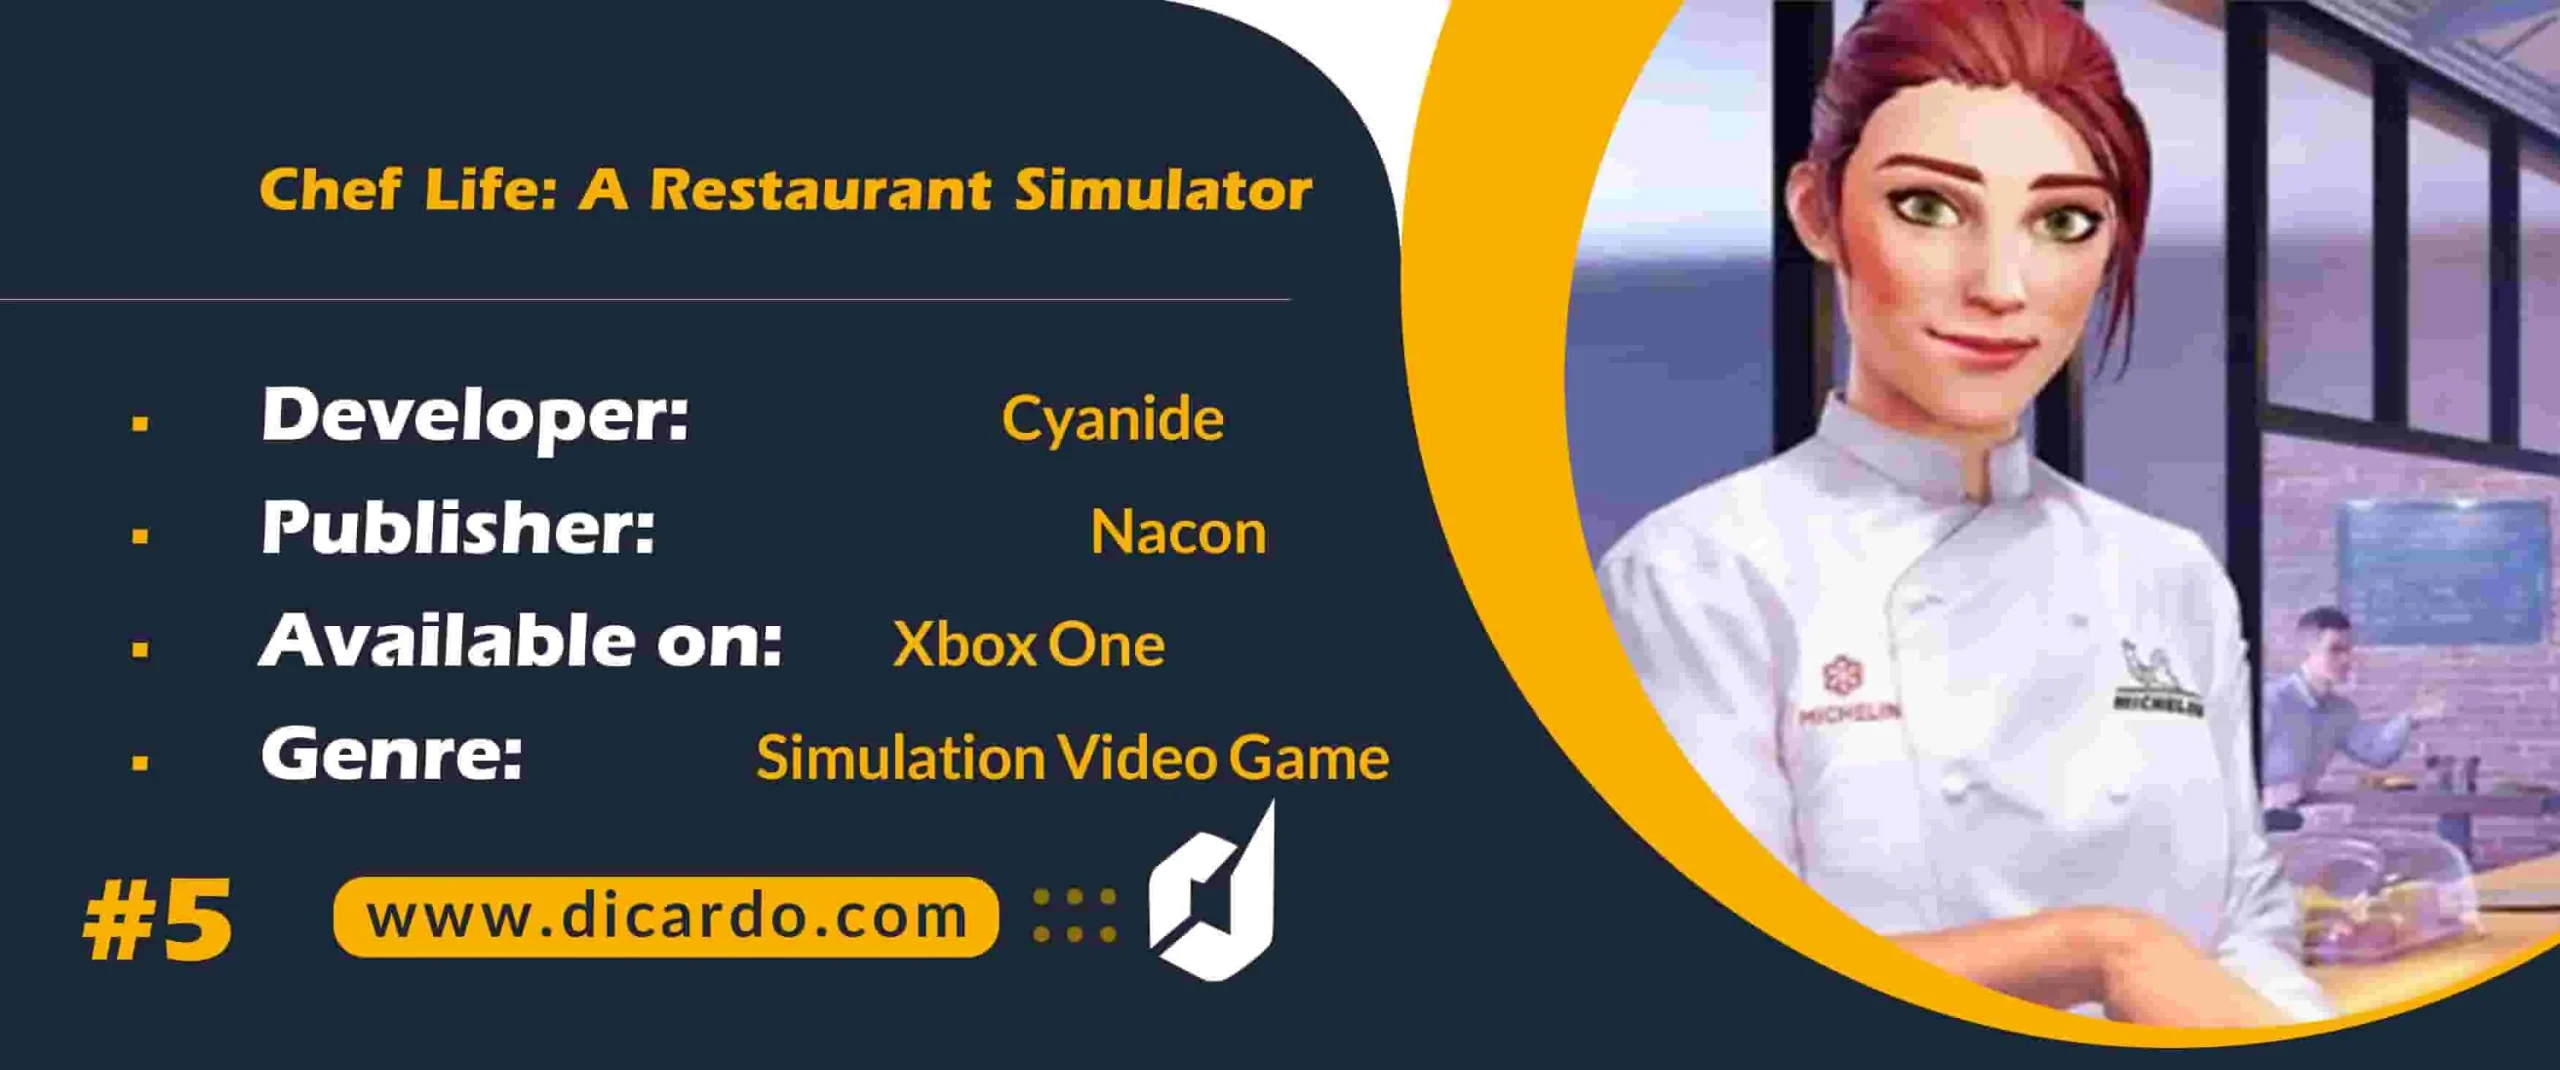 #5 چف لایف ا رستورانت سیمولیشر Chef Life: A Restaurant Simulator